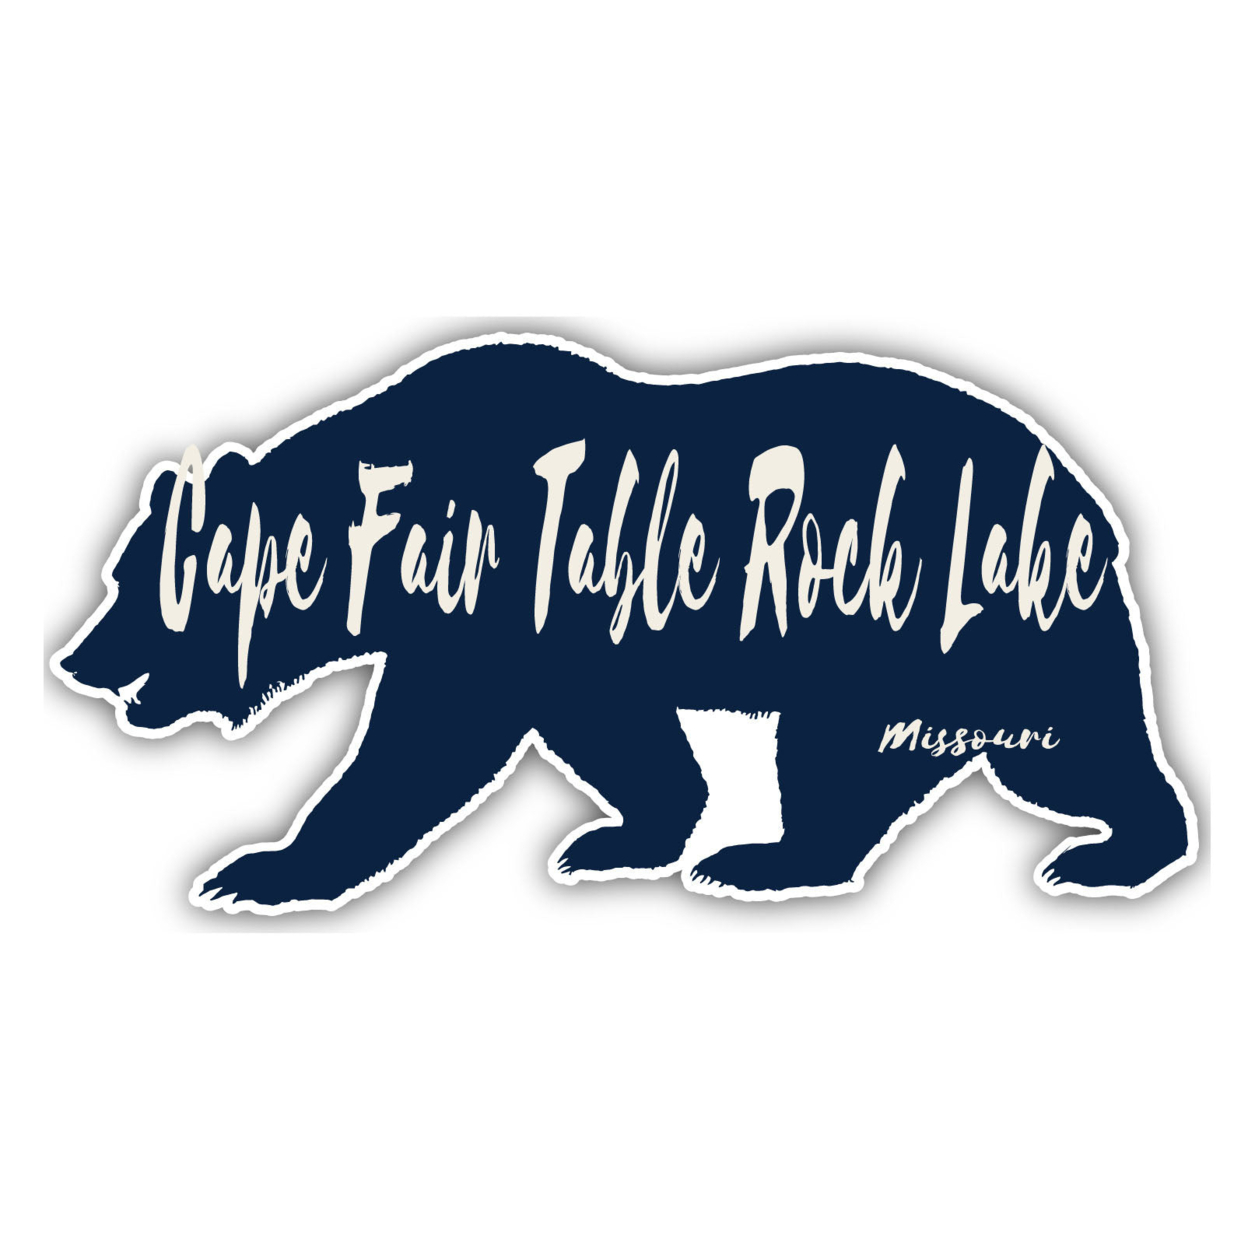 Cape Fair Table Rock Lake Missouri Souvenir Decorative Stickers (Choose Theme And Size) - Single Unit, 2-Inch, Bear